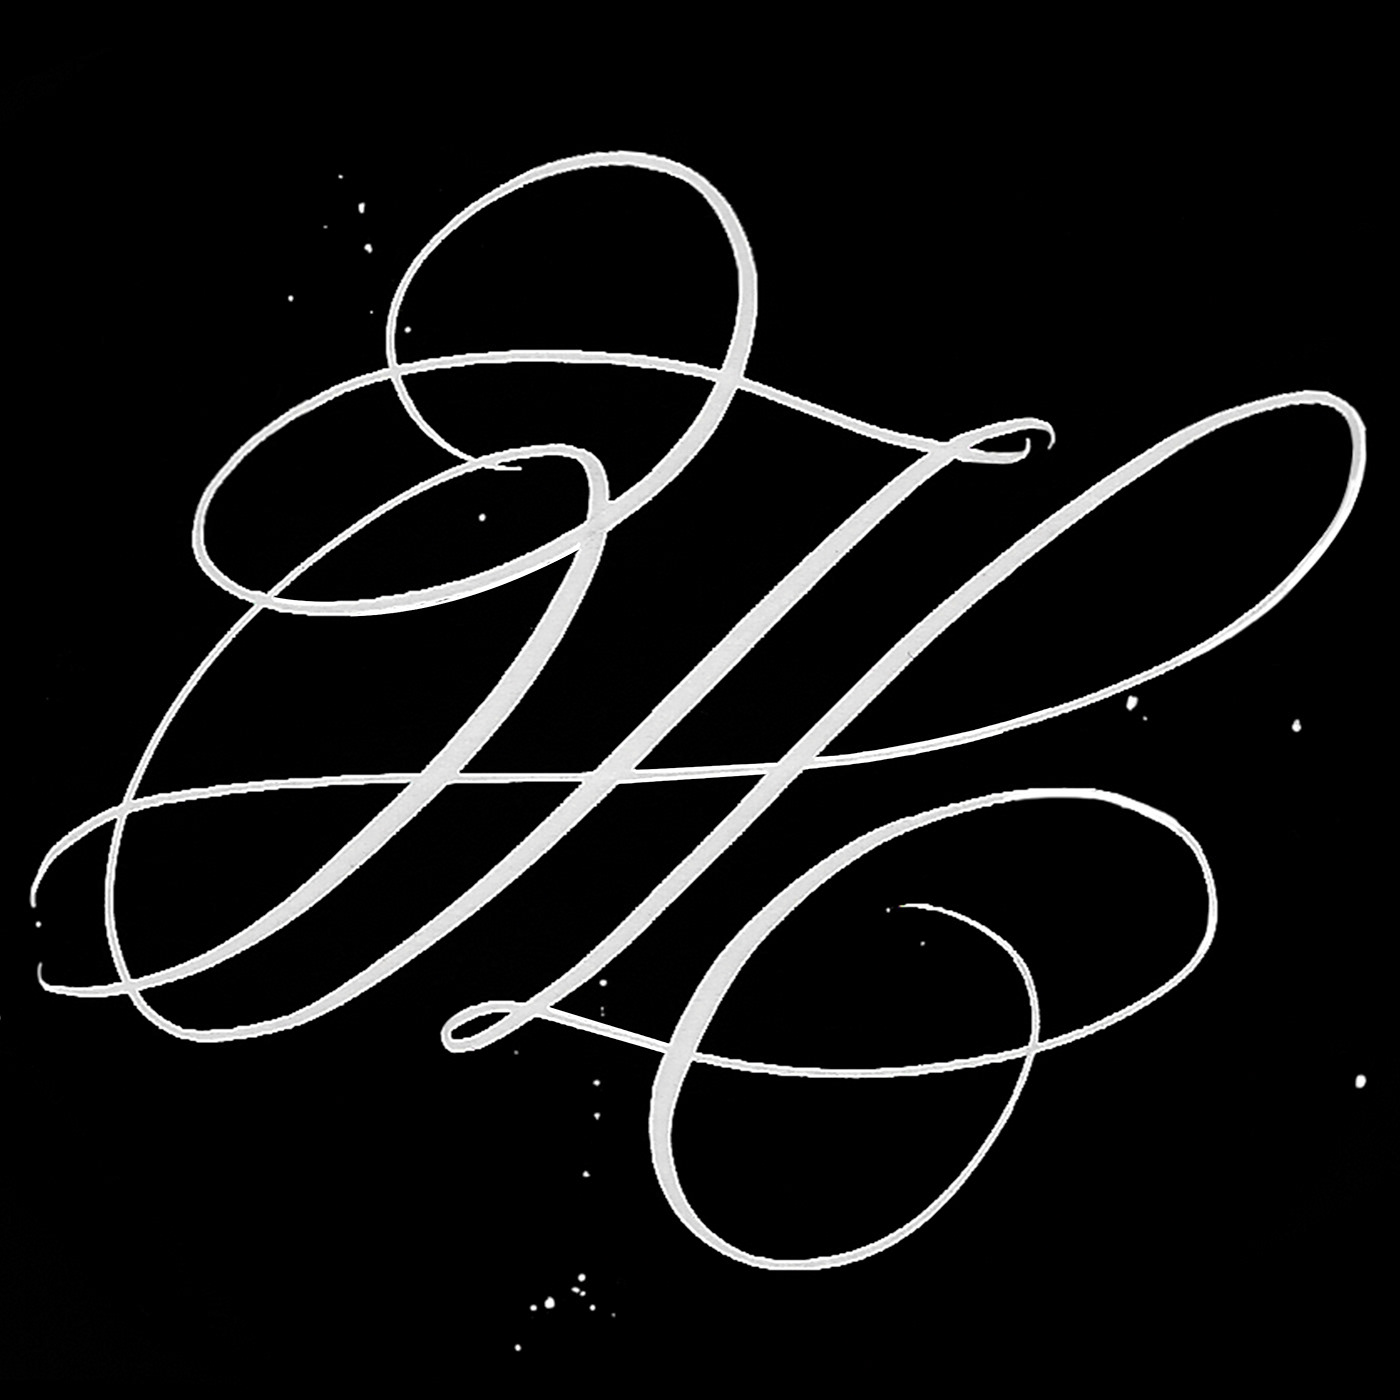 36daysoftype tipografia caligrafia lettering brush Blackletter gif blackandwhite